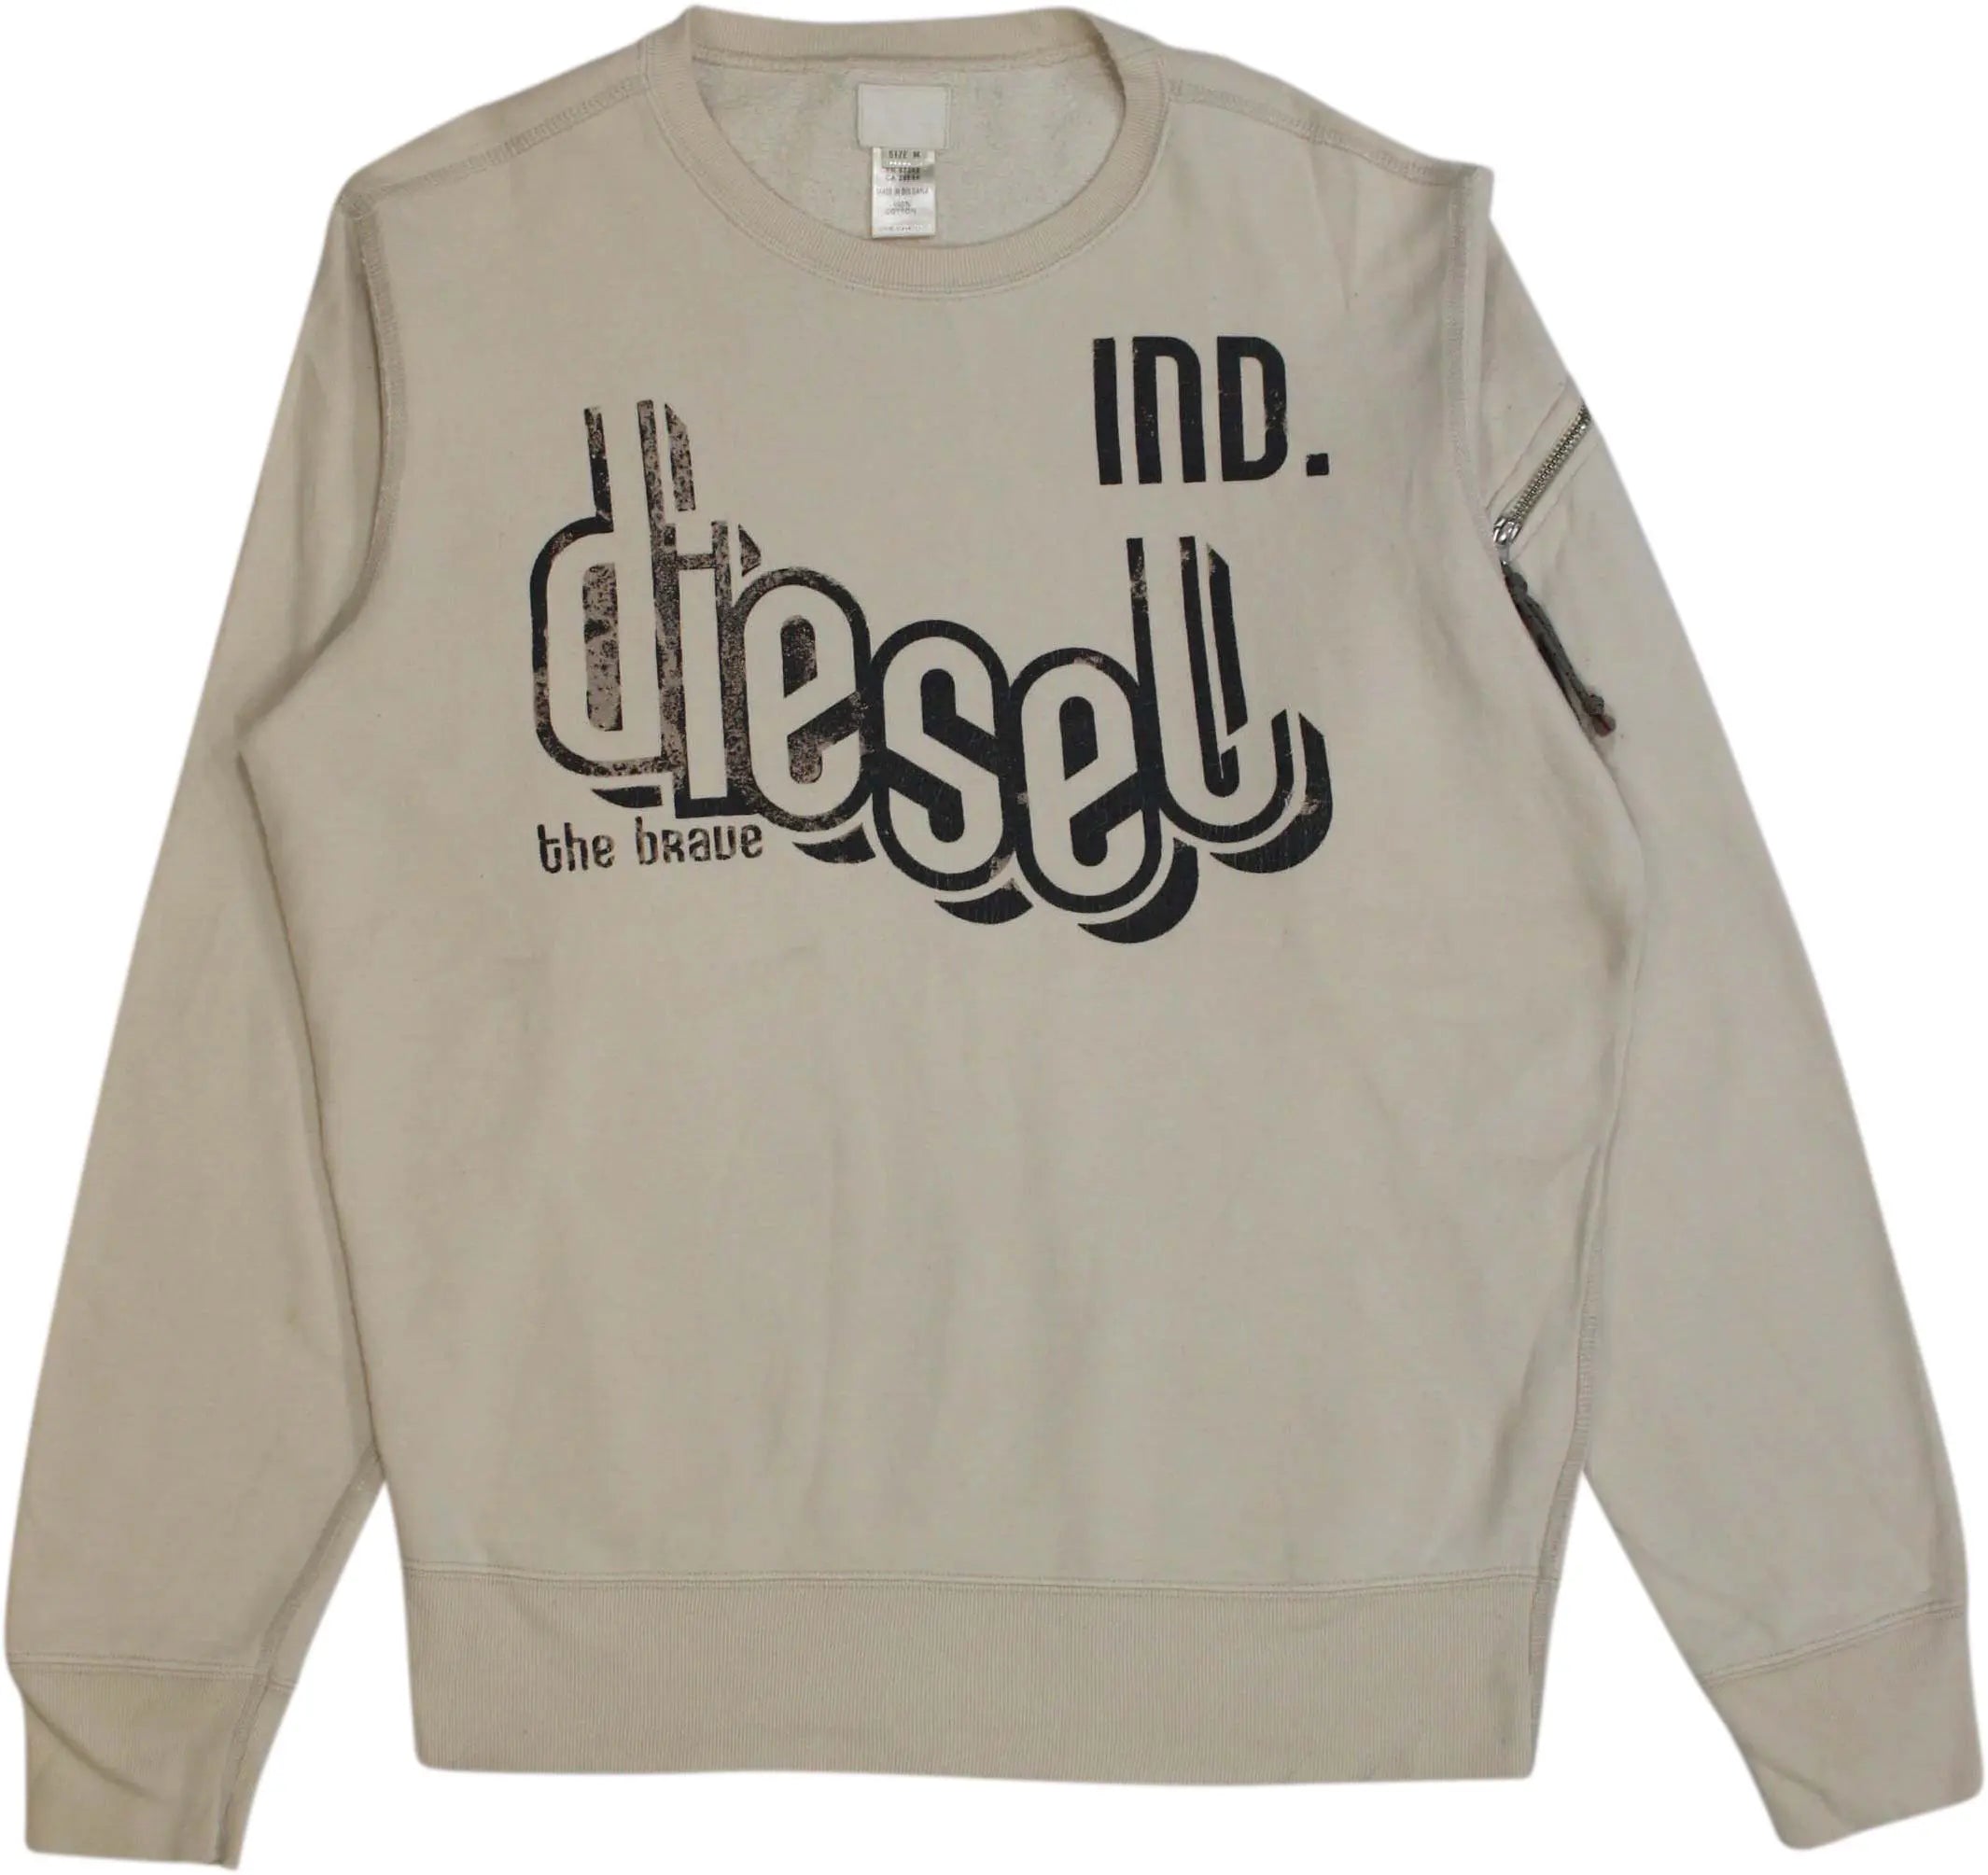 Diesel - Crewneck Sweatshirt by Diesel- ThriftTale.com - Vintage and second handclothing